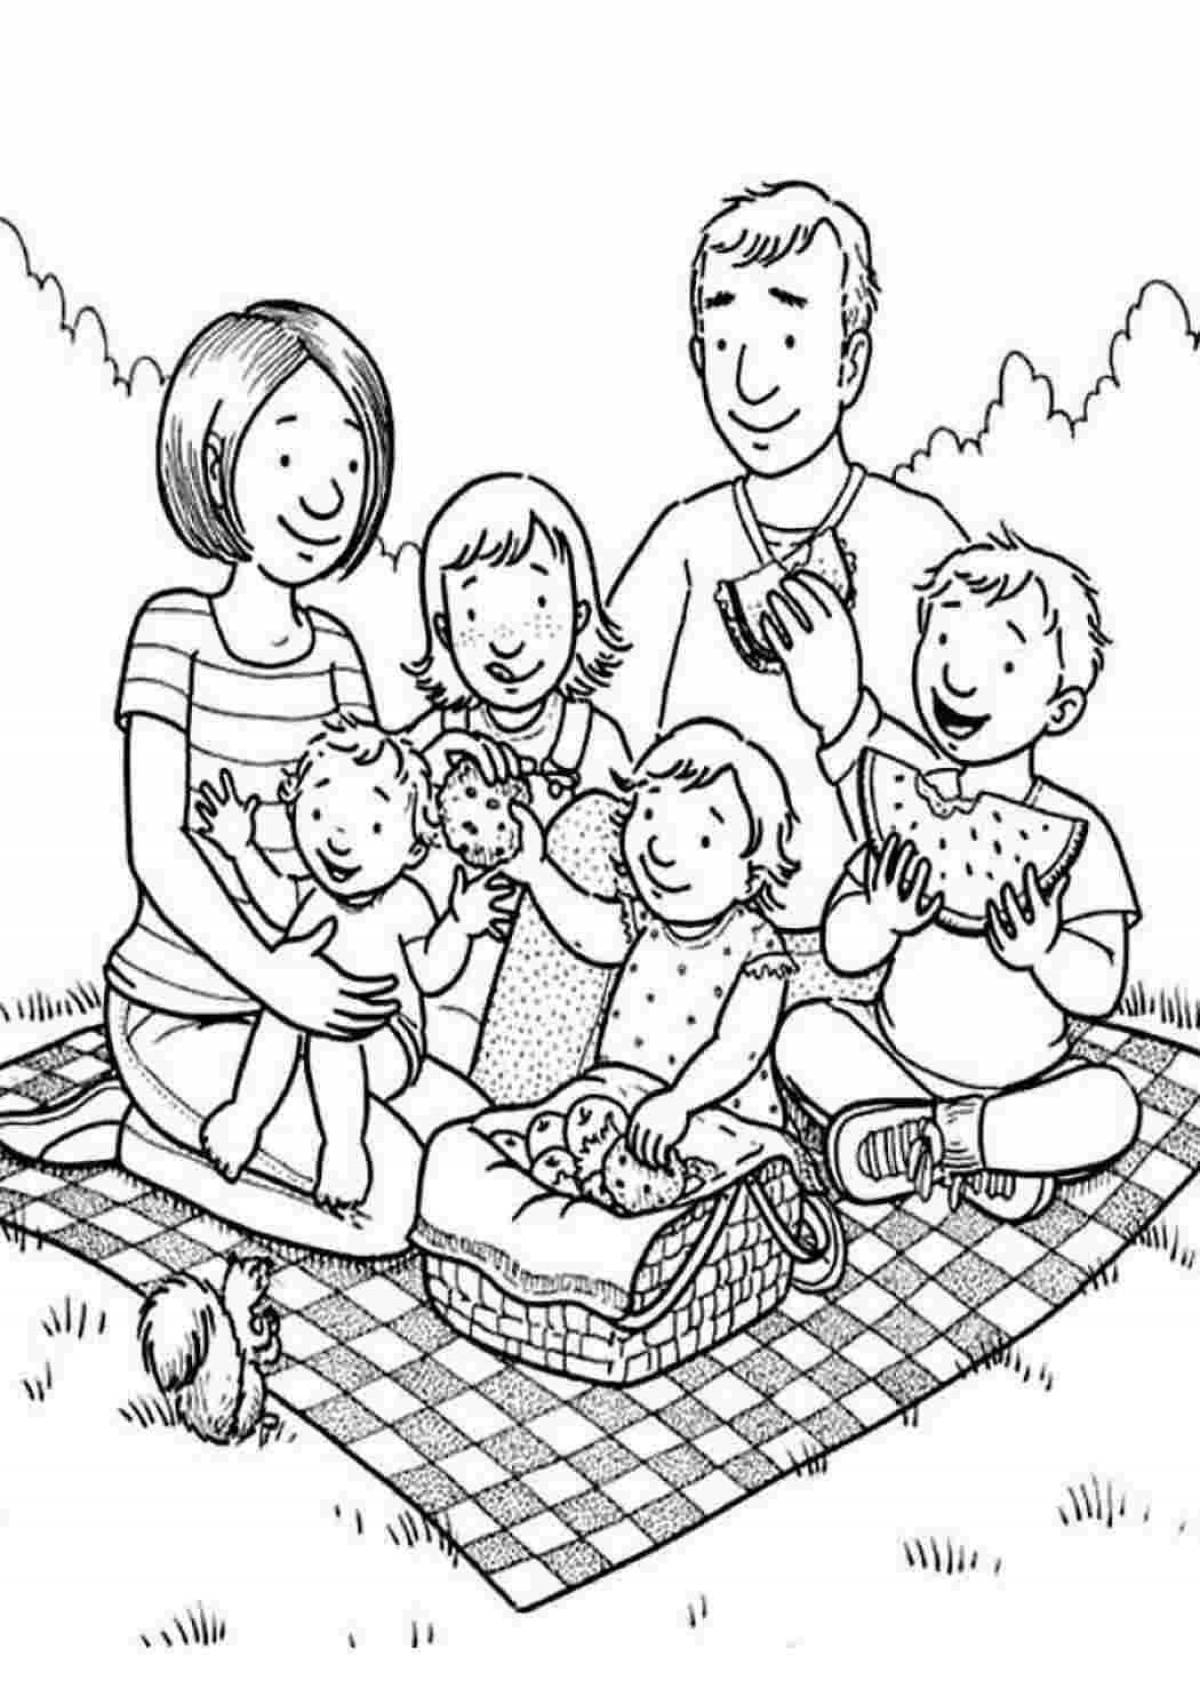 Fun family coloring book